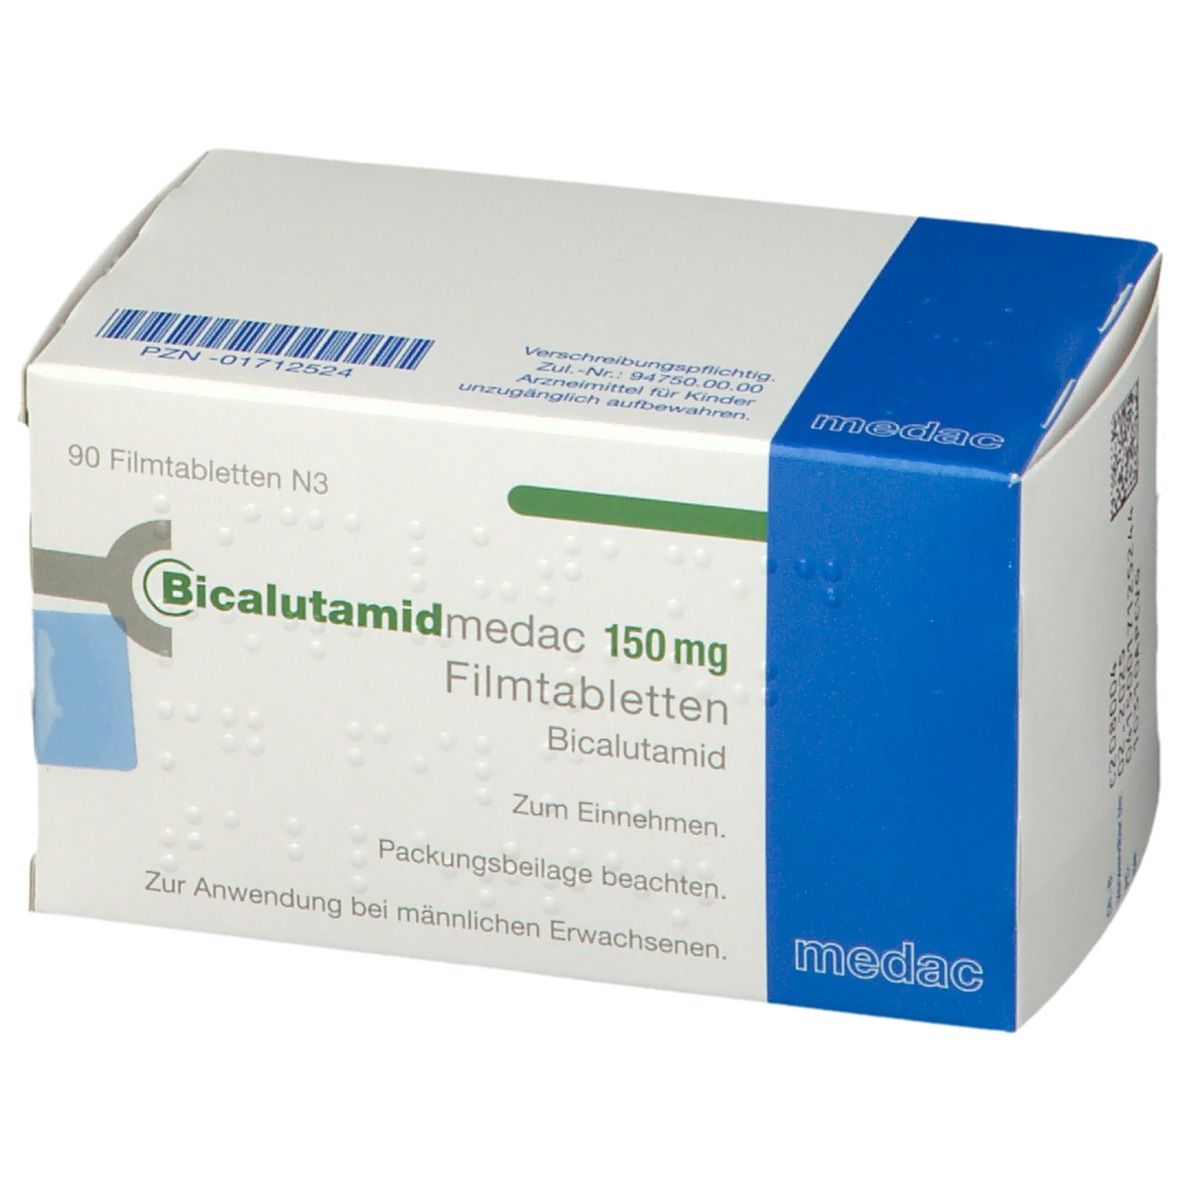 Bicalutamid medac 150 mg